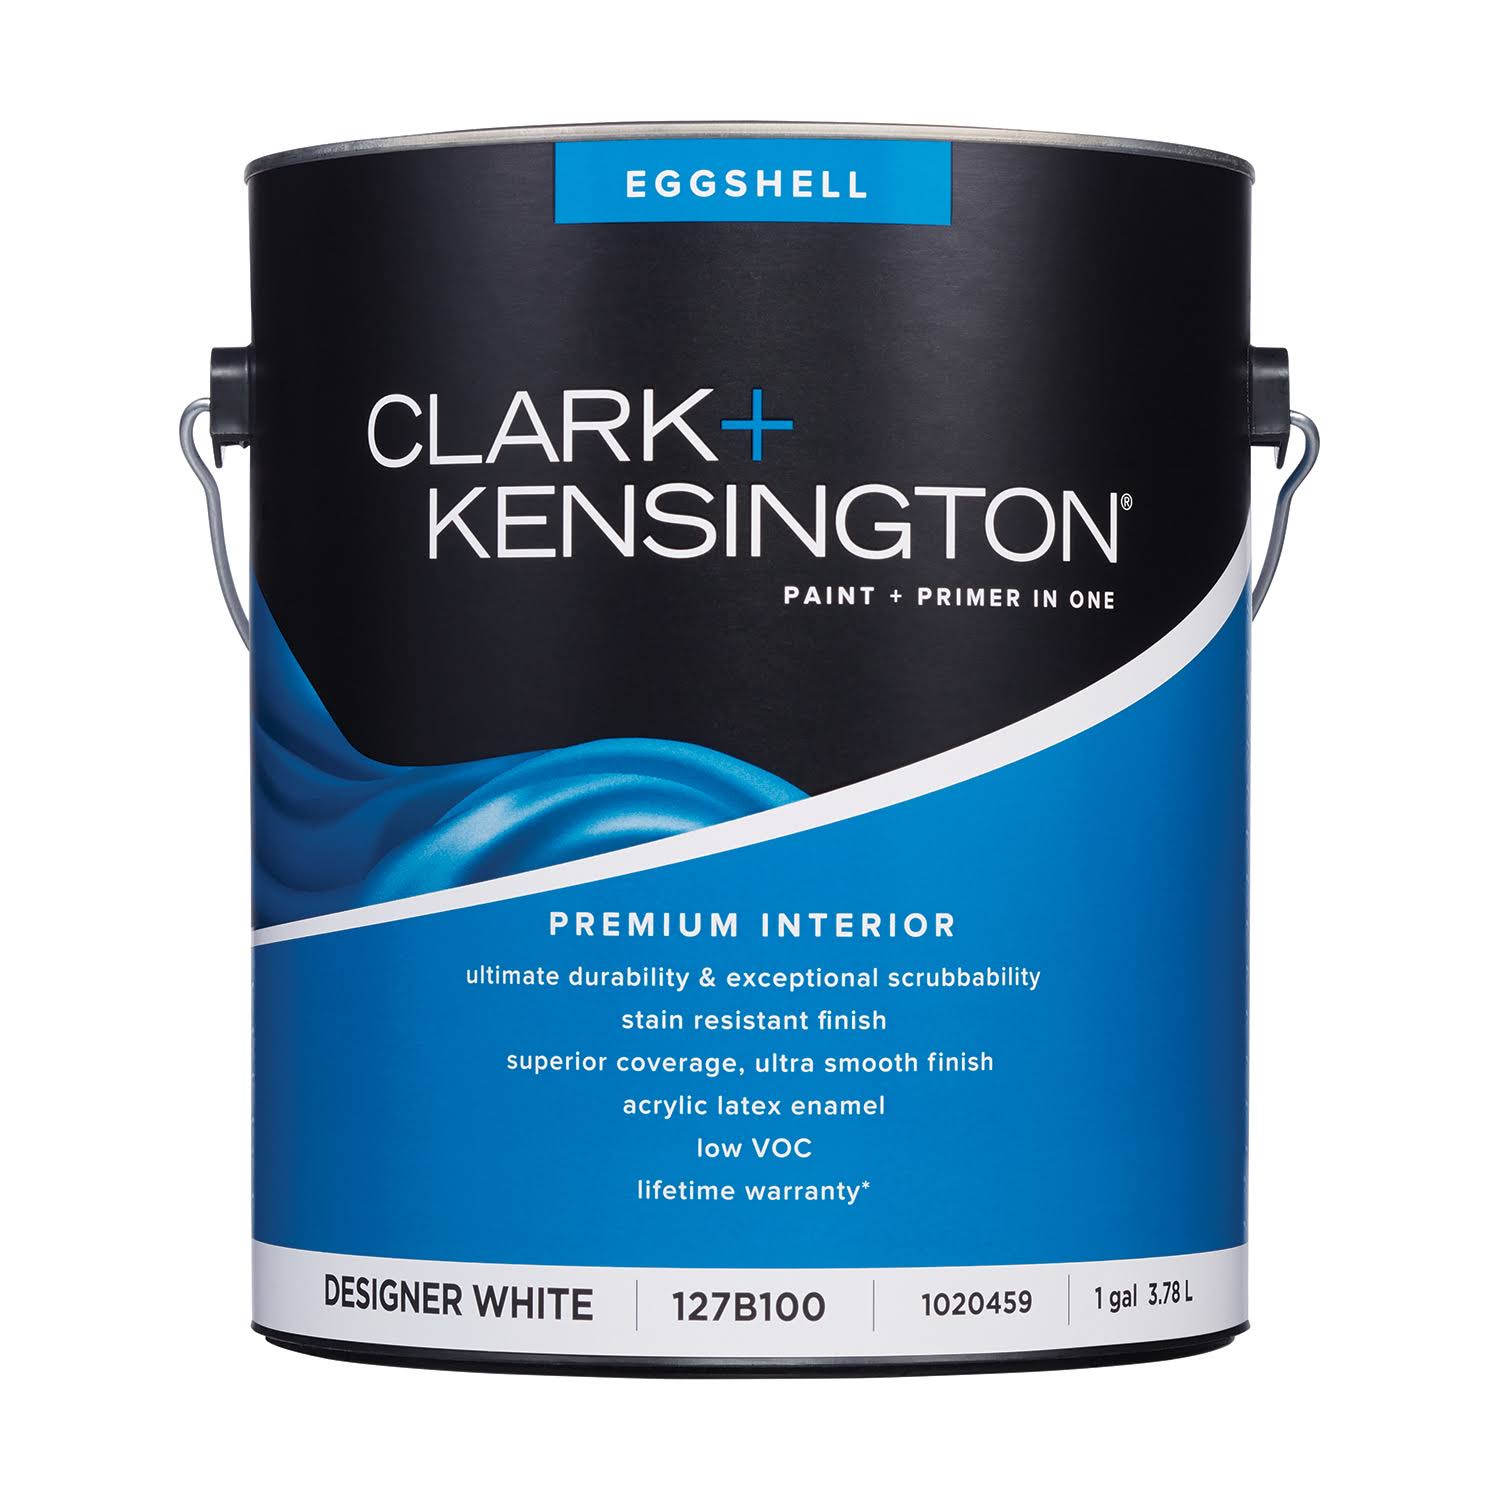 Clark+kensington Eggshell Designer White Premium Paint Interior 1 Gal